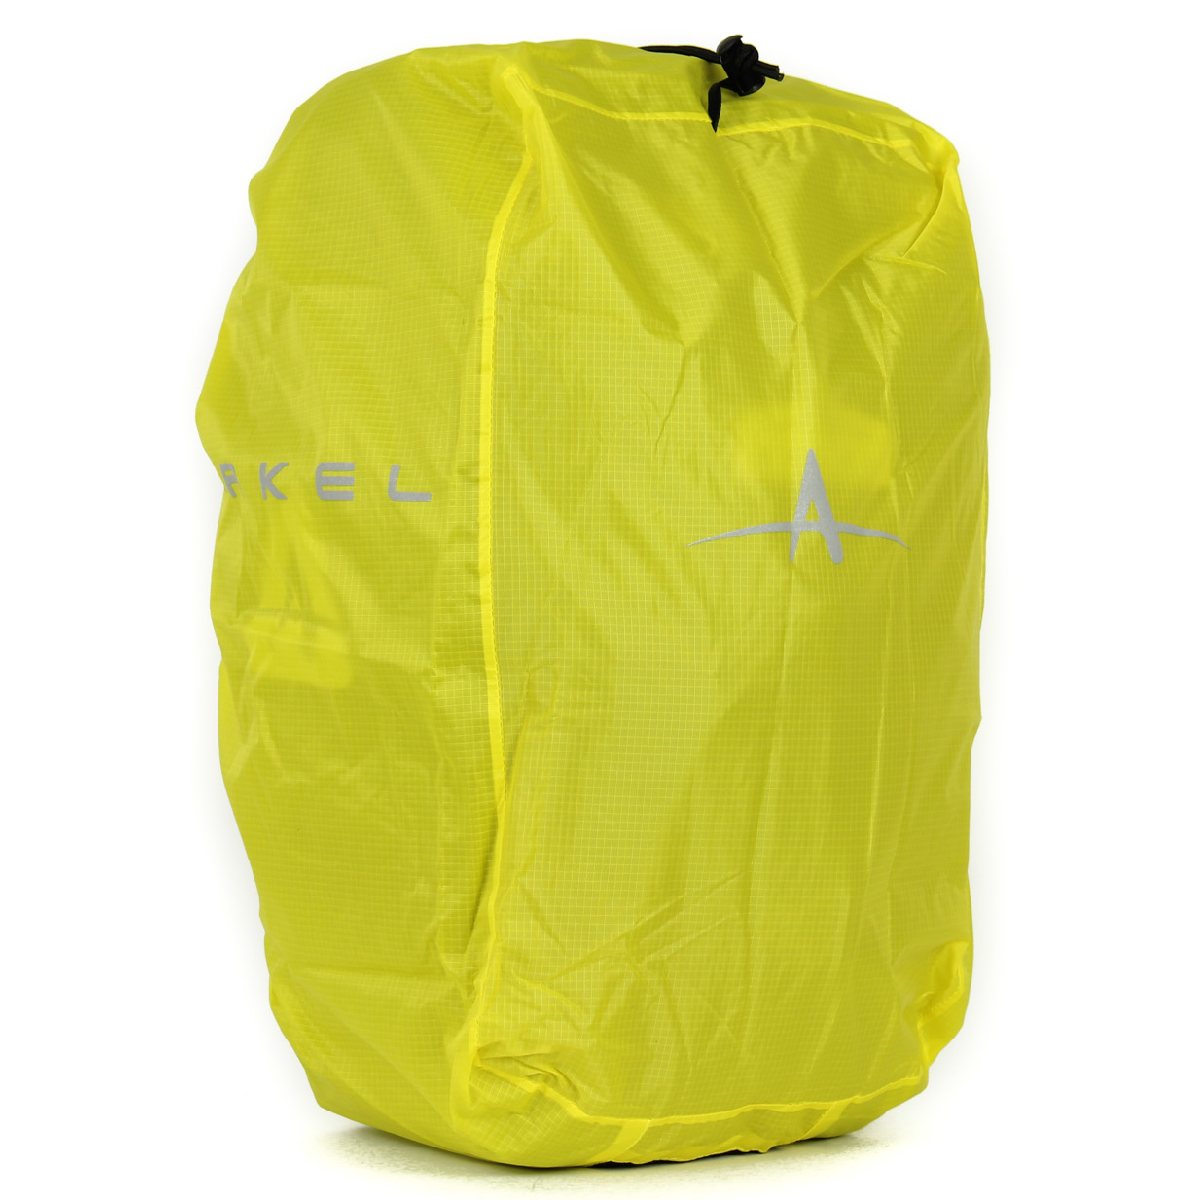 Arkel Waterproof Bag Cover - T-28 B-26